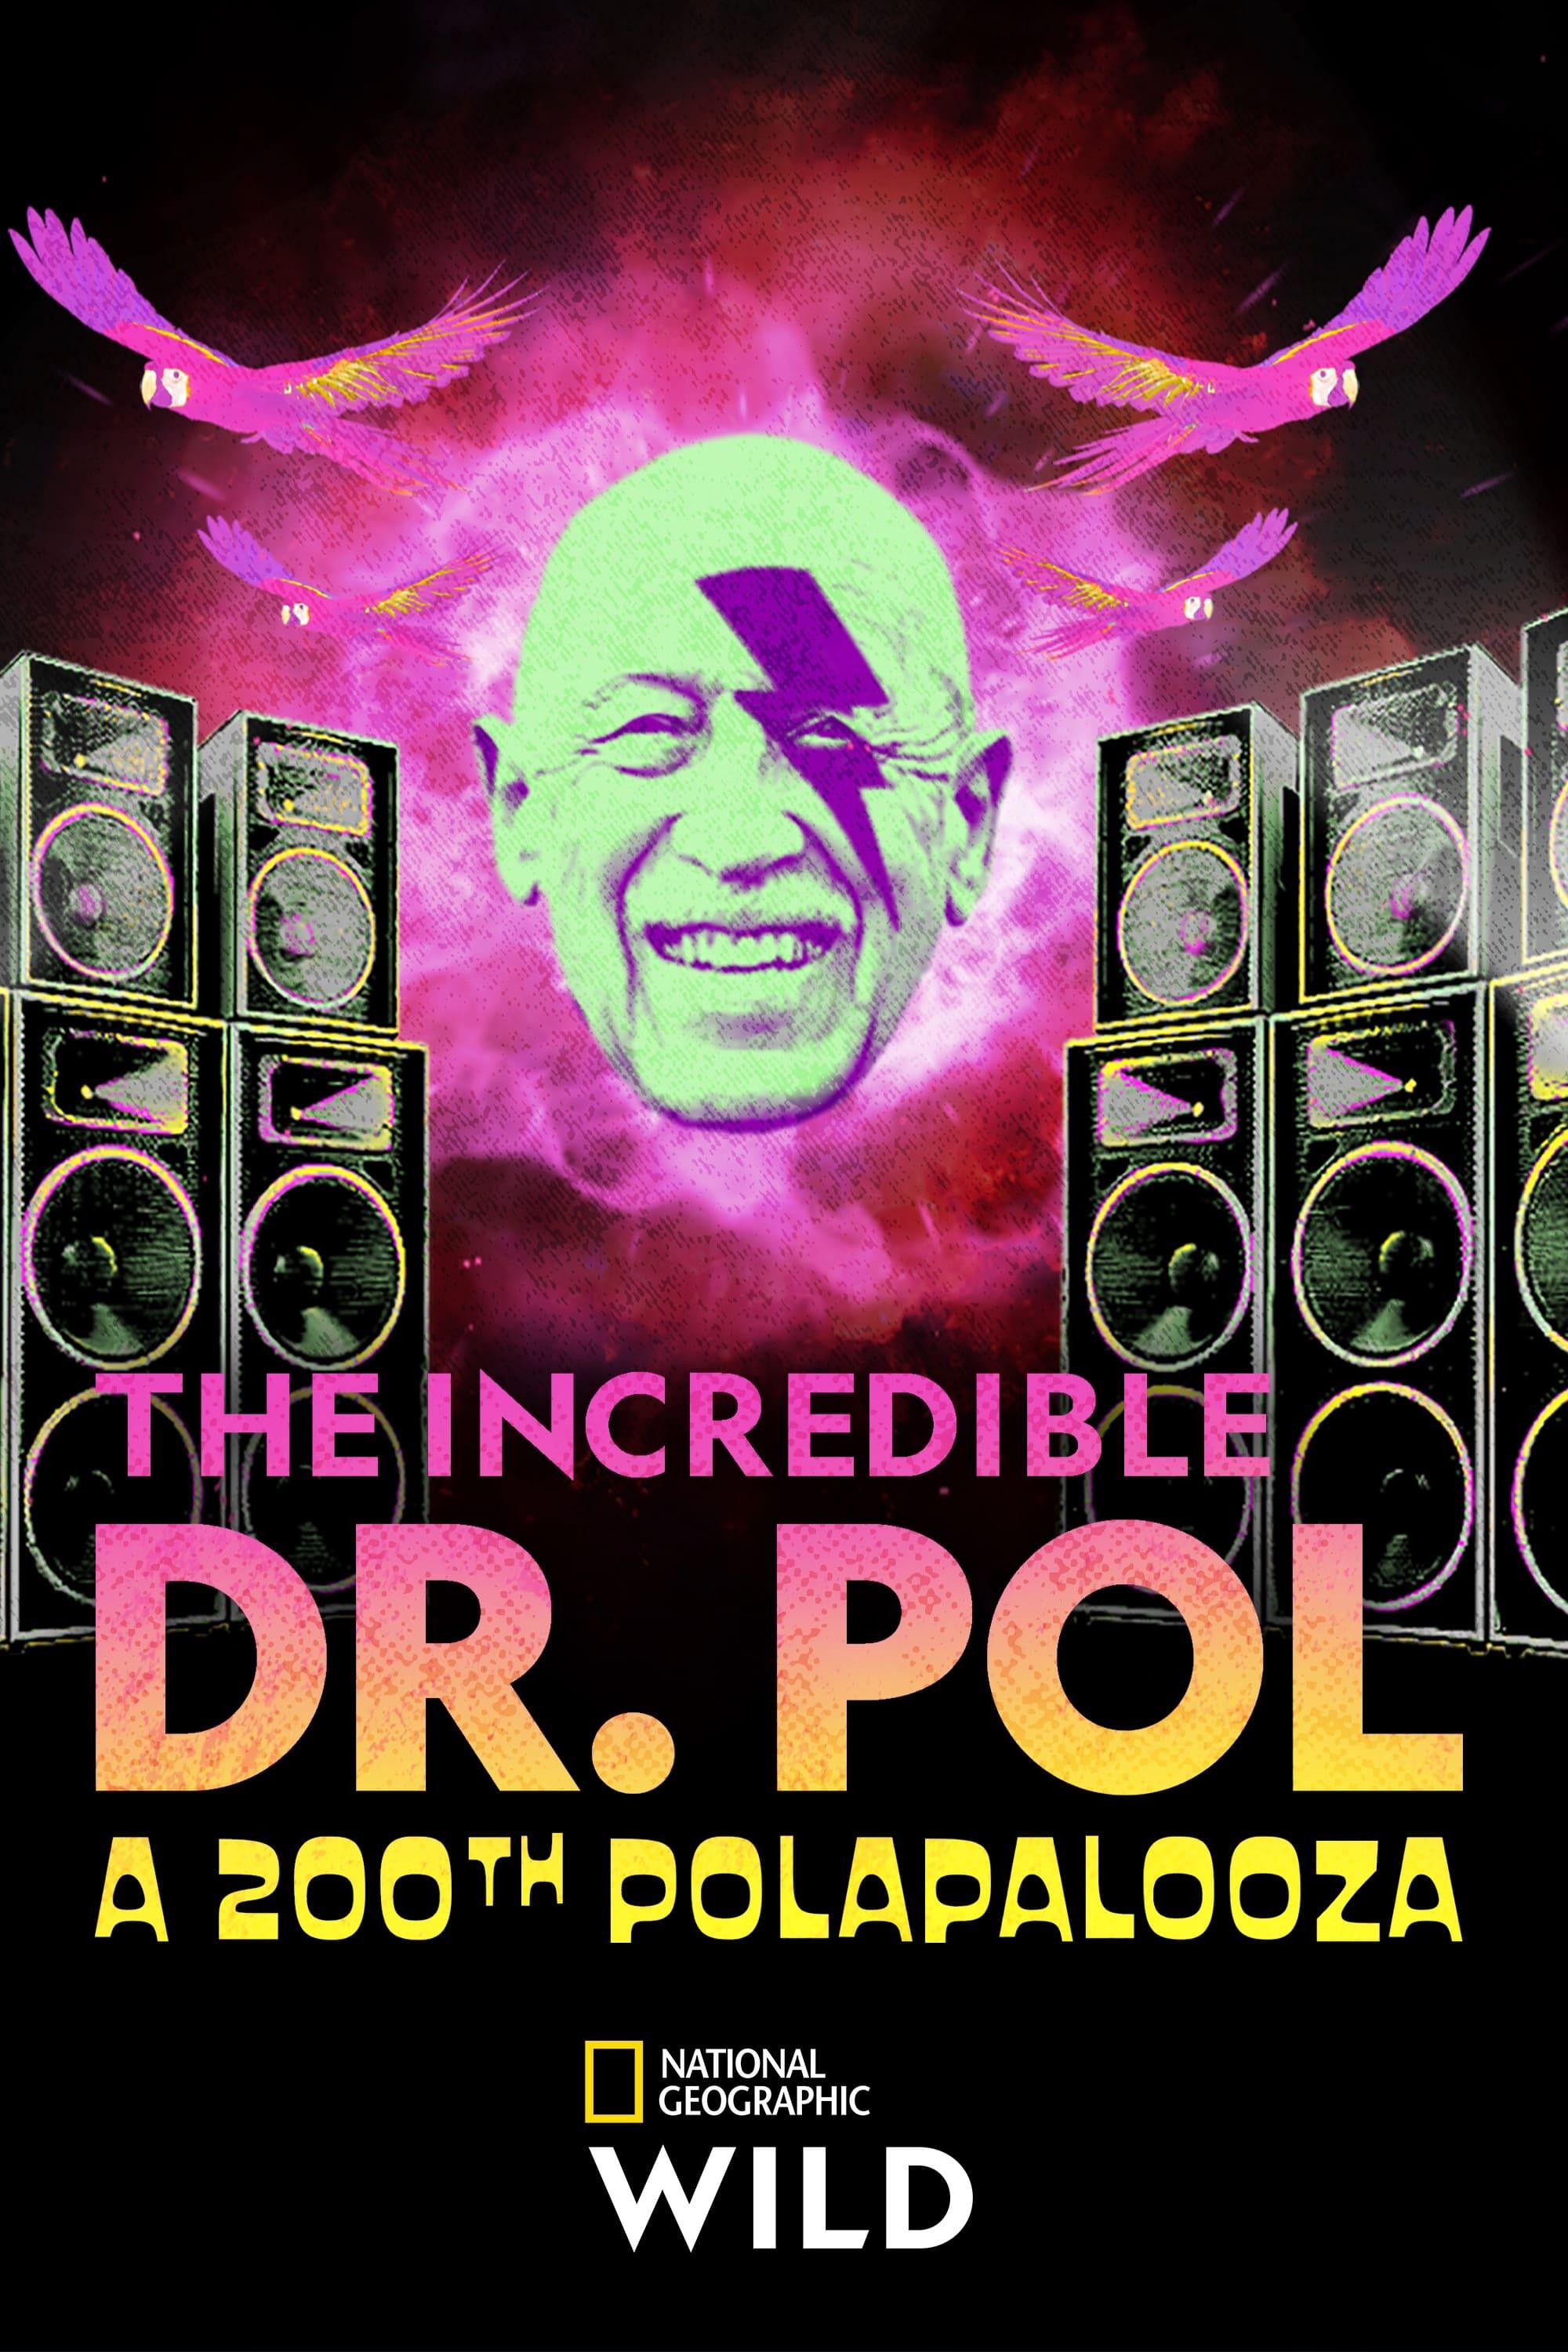 The Incredible Dr. Pol: A 200th Polapalooza poster